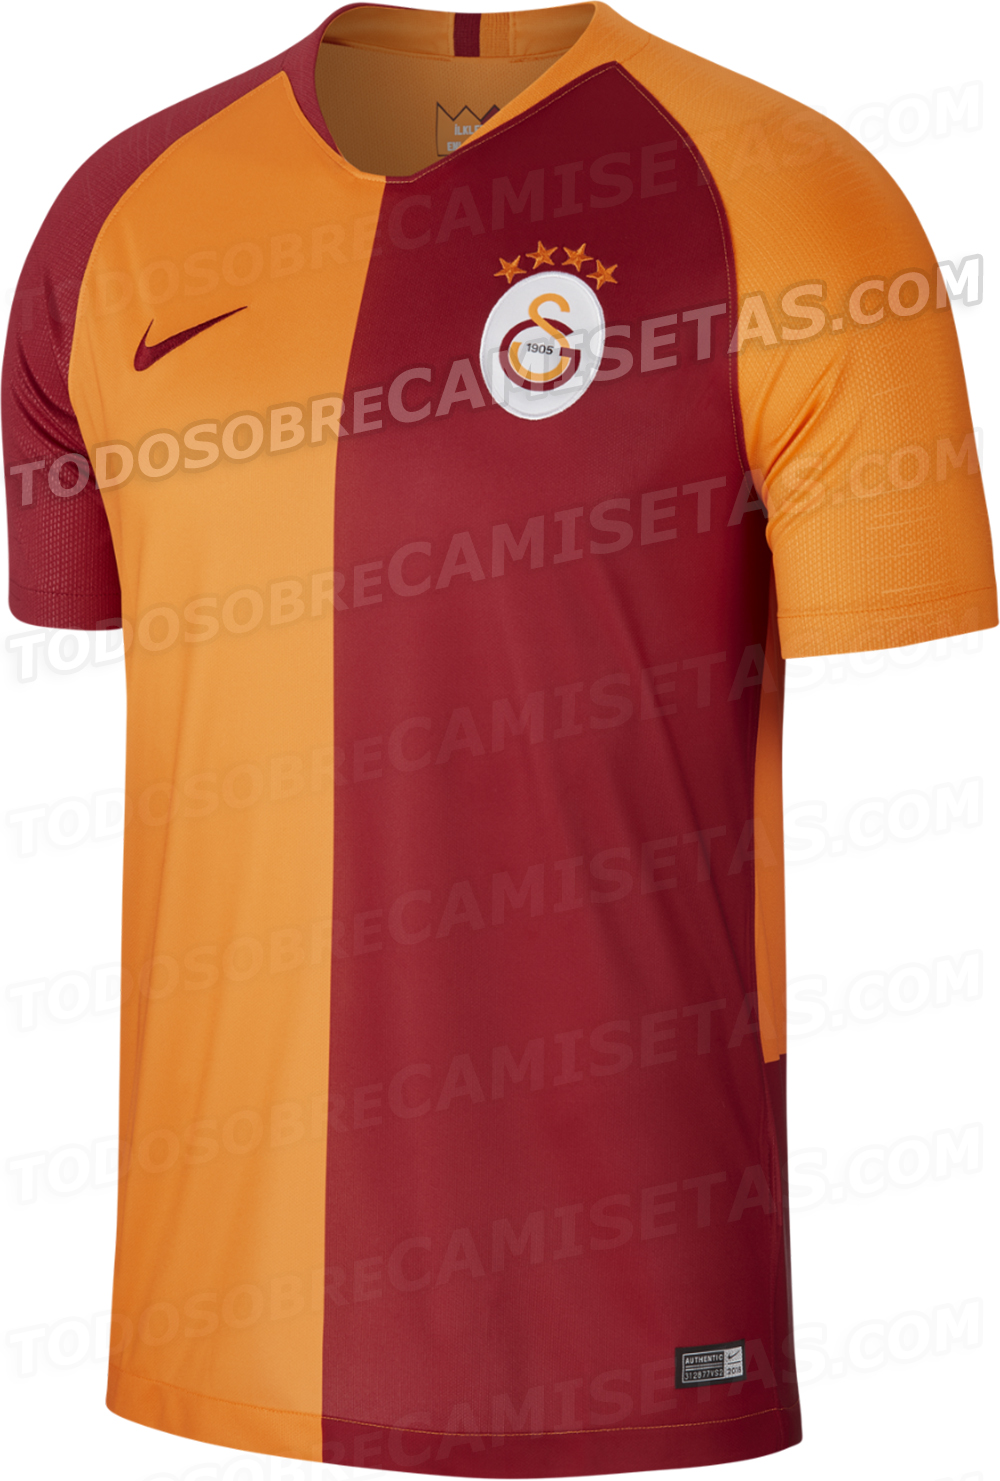 Galatasaray 2018-19 Home Kit LEAKED